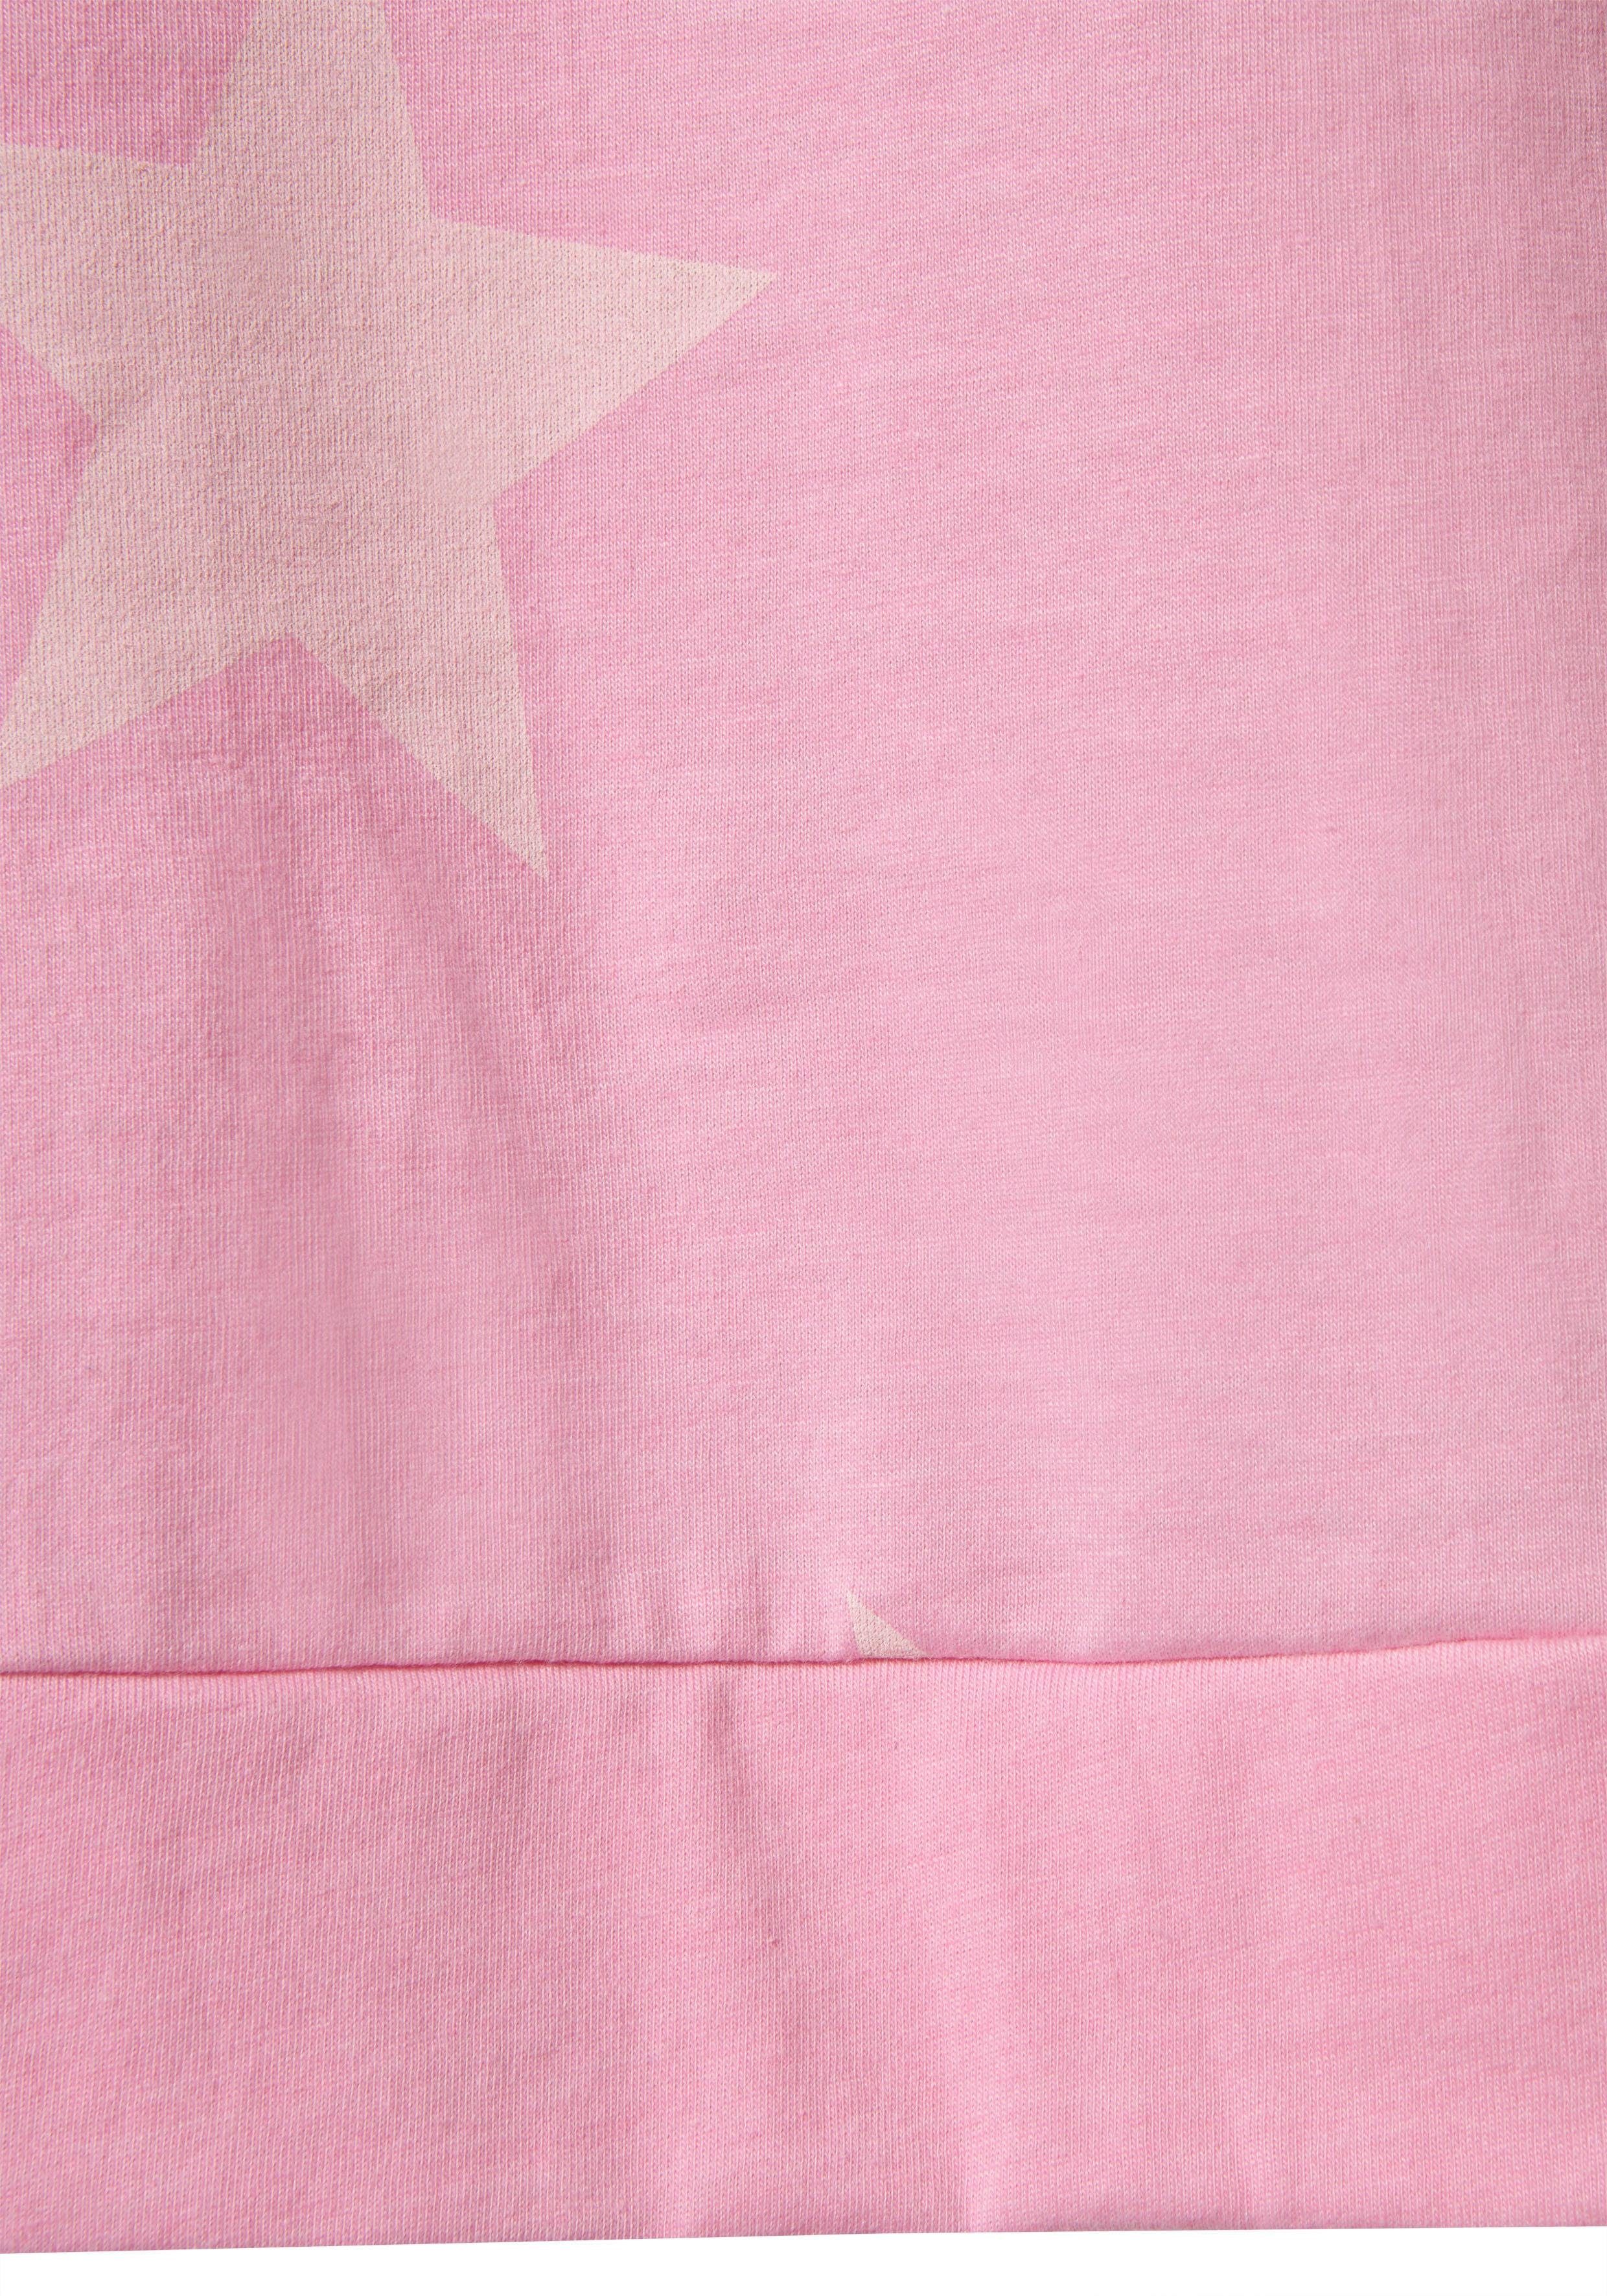 Arizona Nachthemd (2er-Pack) grau-rosa mit Sternen in melierter Optik